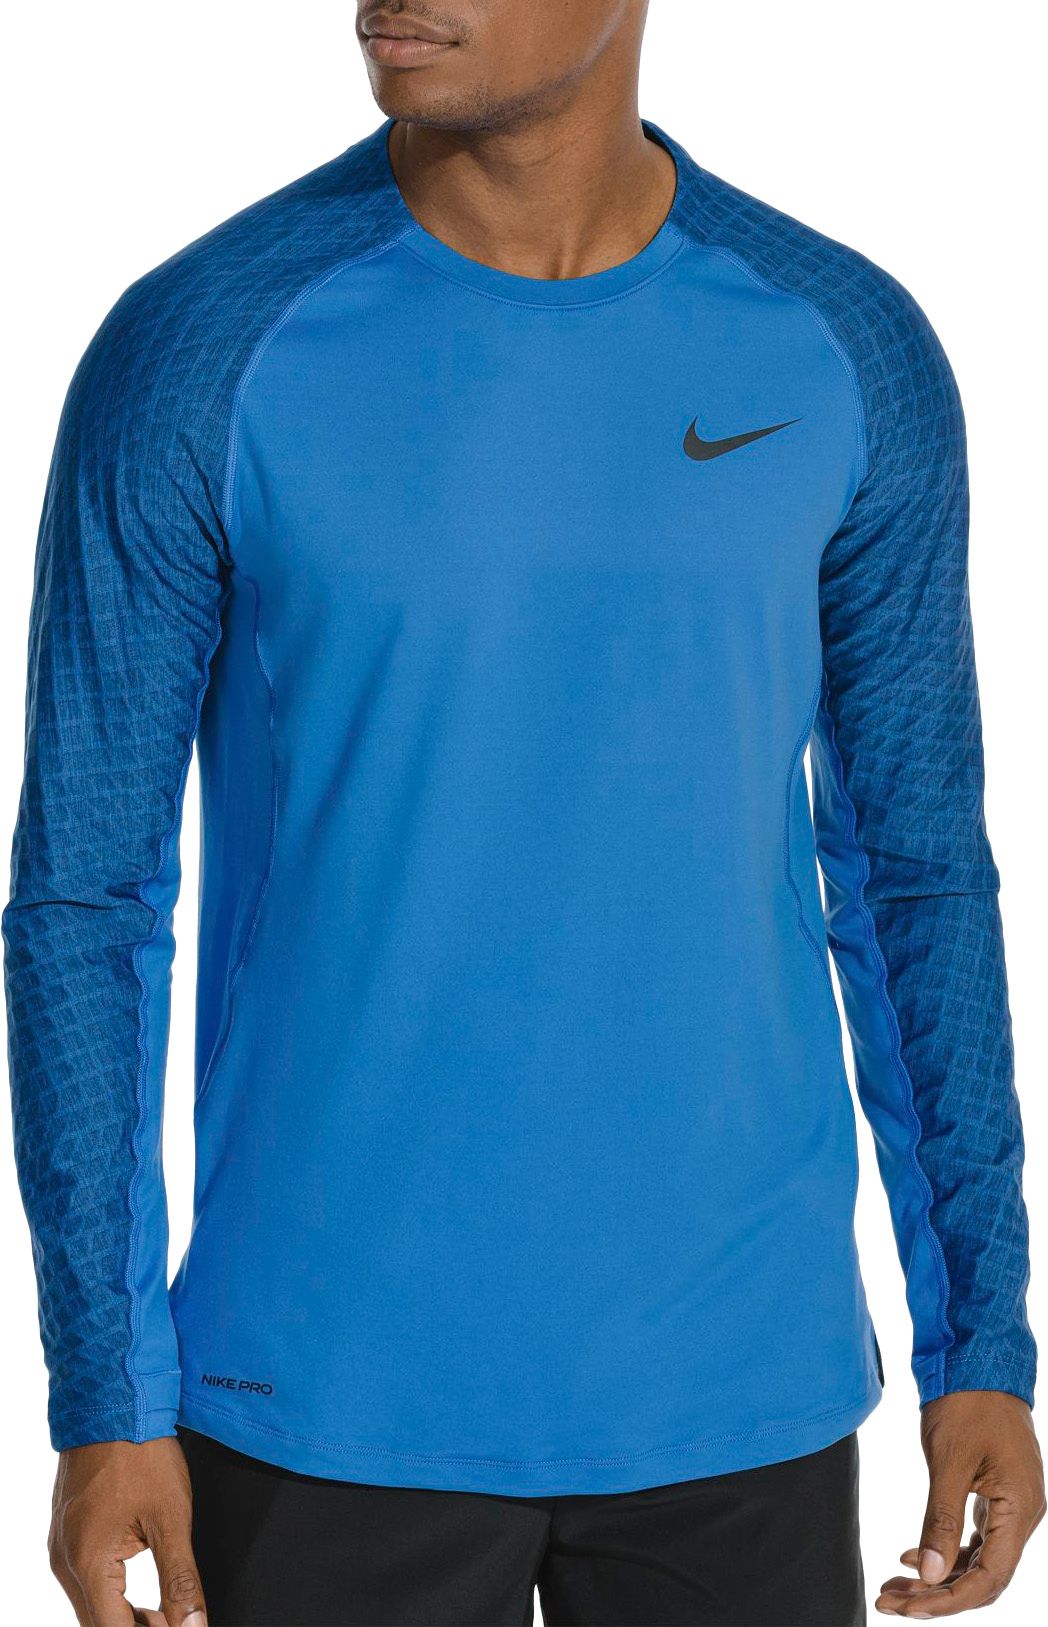 Nike Men's Pro Training Long Sleeve Shirt - .97